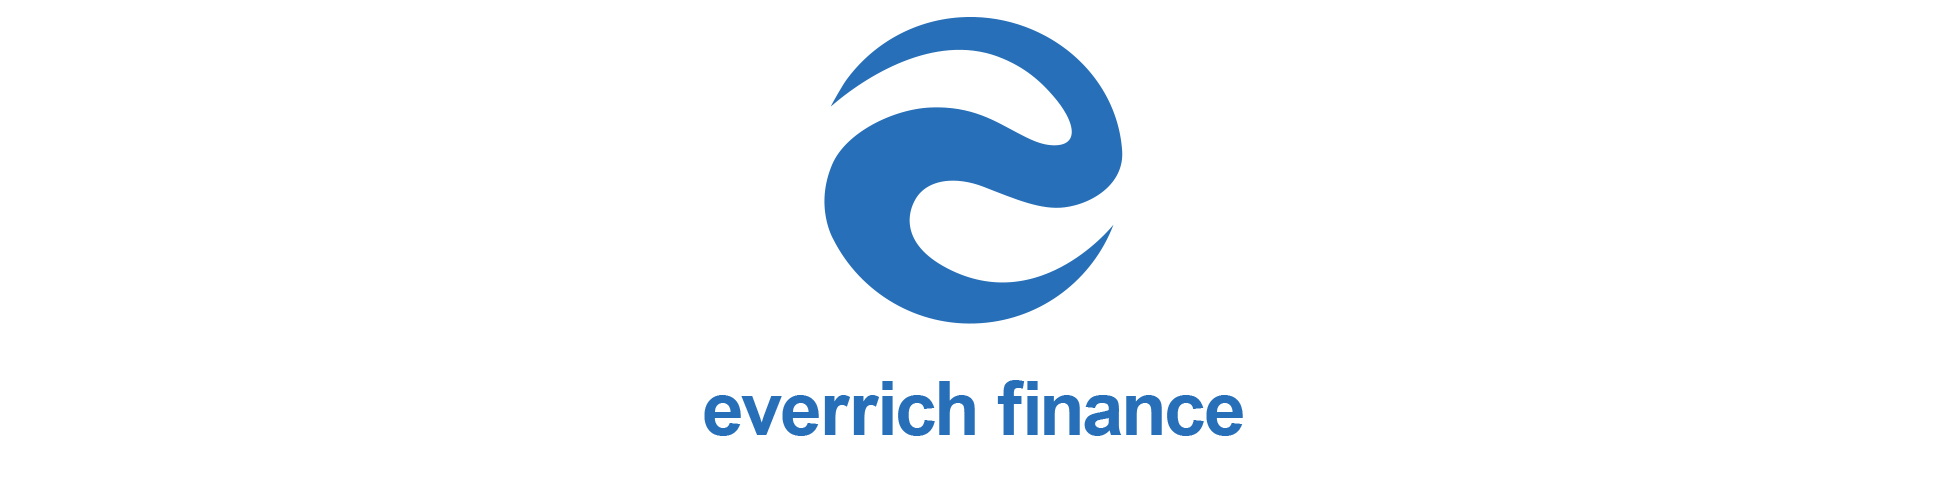 Everrich Finance logo | Ravit Insights